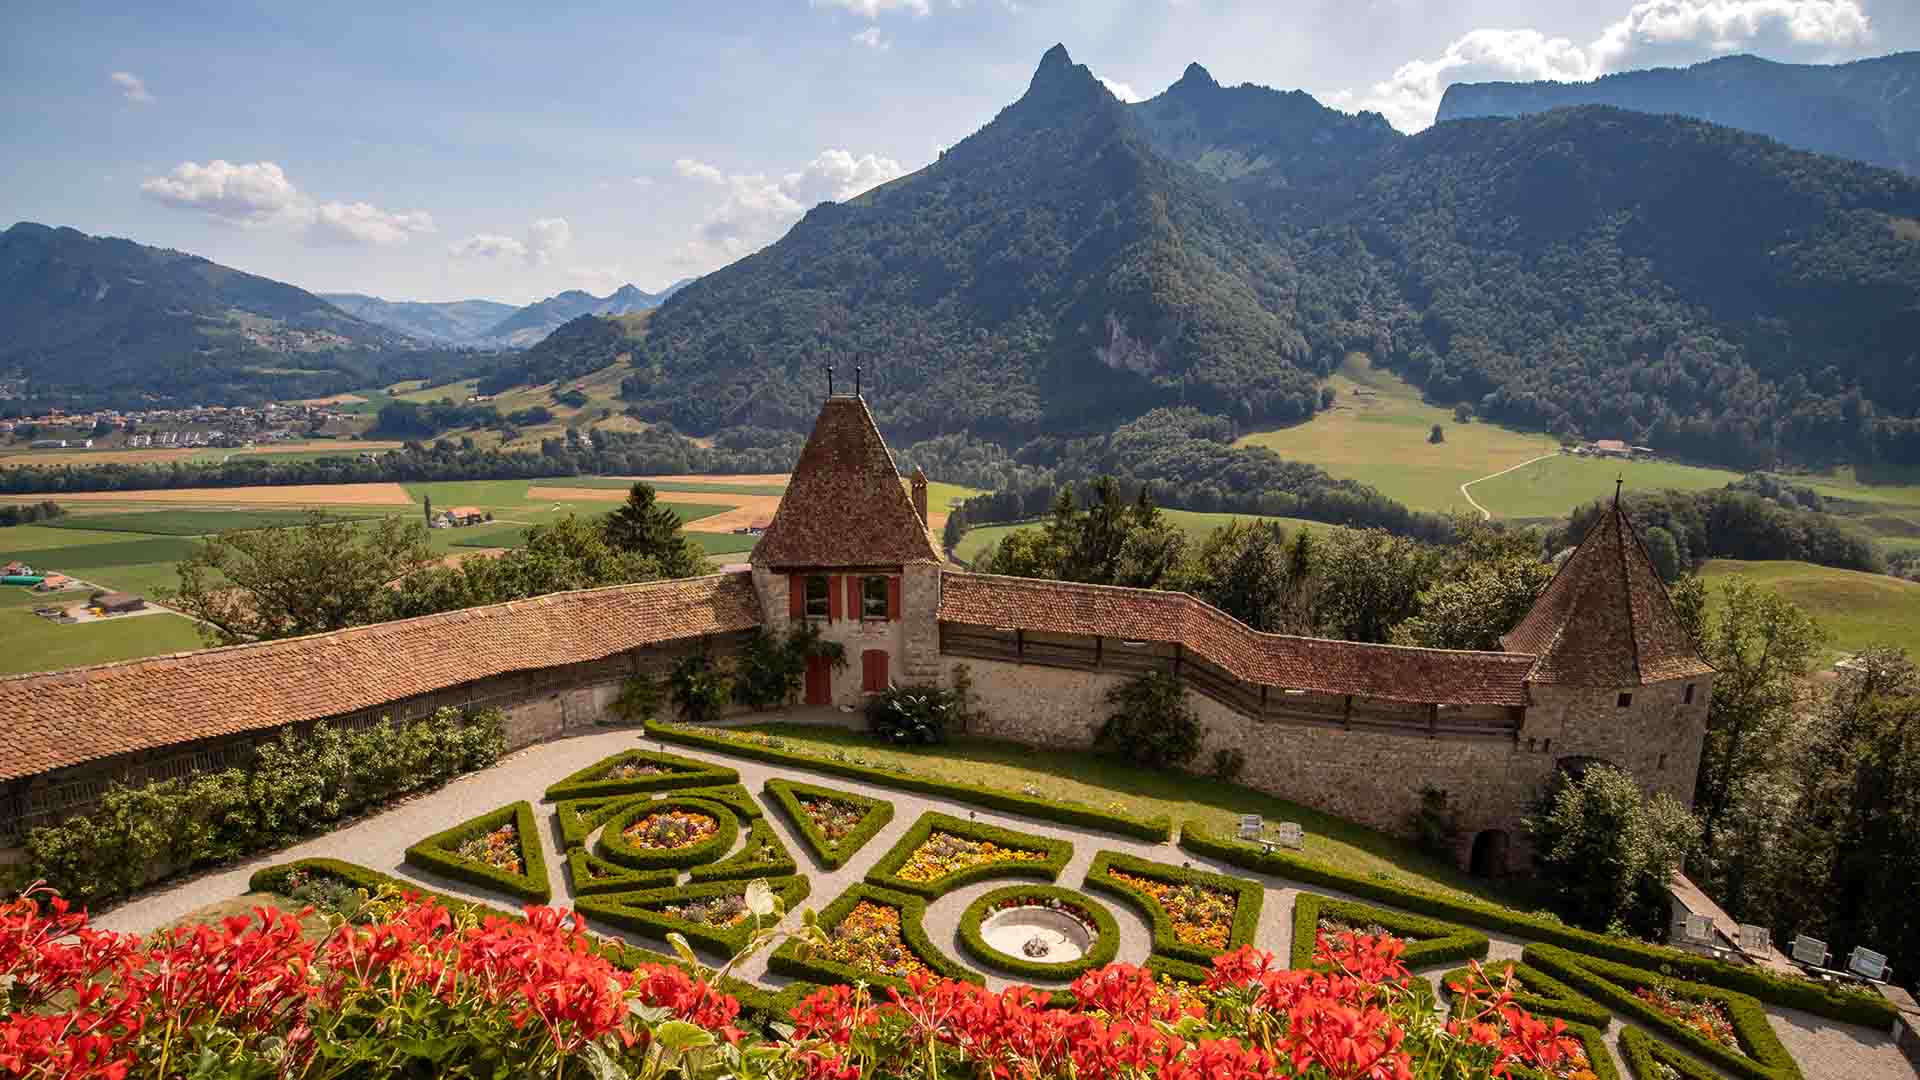 Gruyeres castle garden, Switzerland